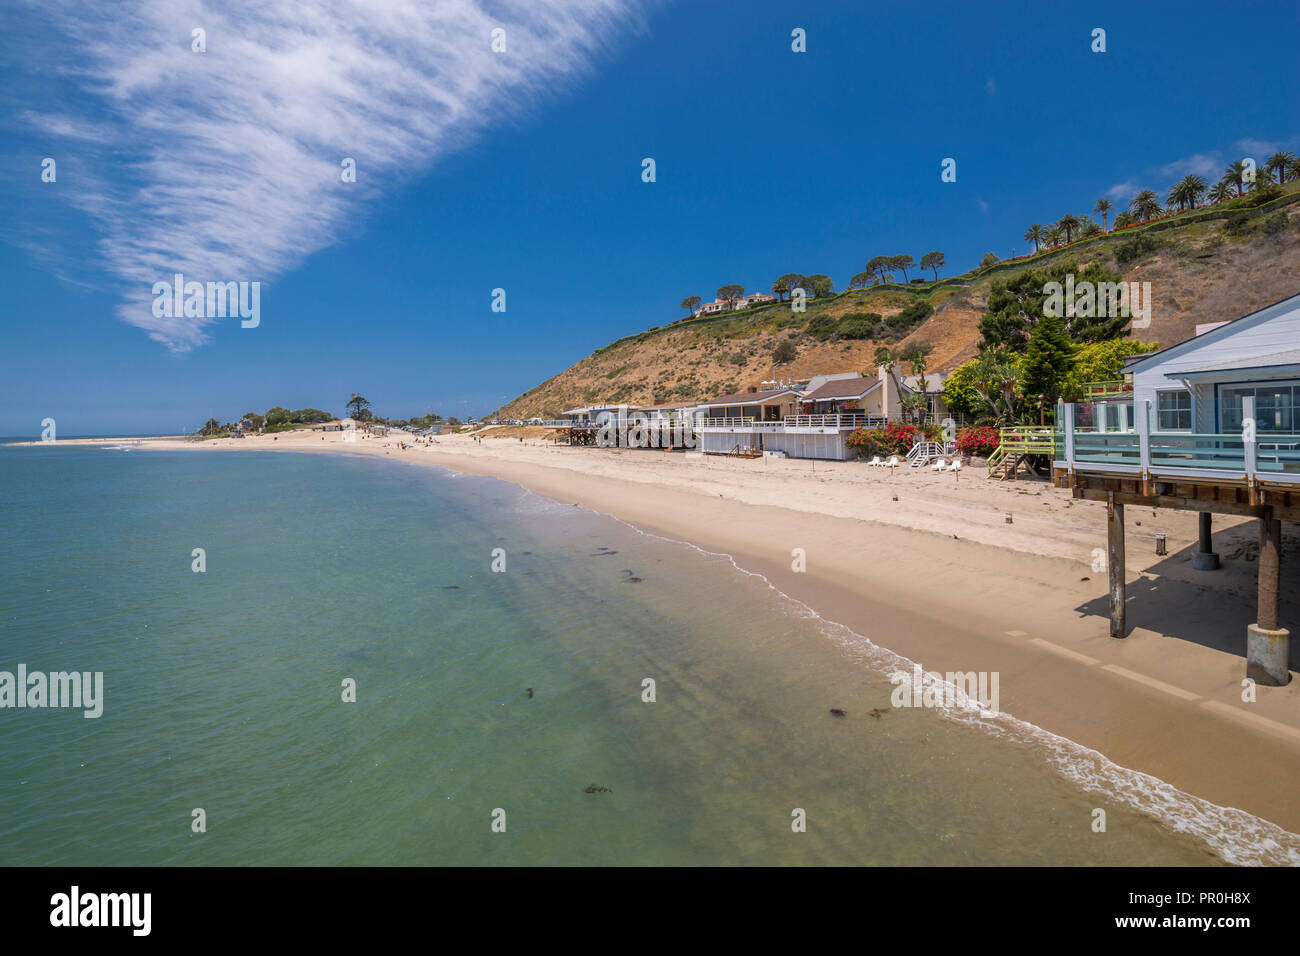 View of Malibu Beach from Malibu Pier, Malibu, California, United States of America, North America Stock Photo